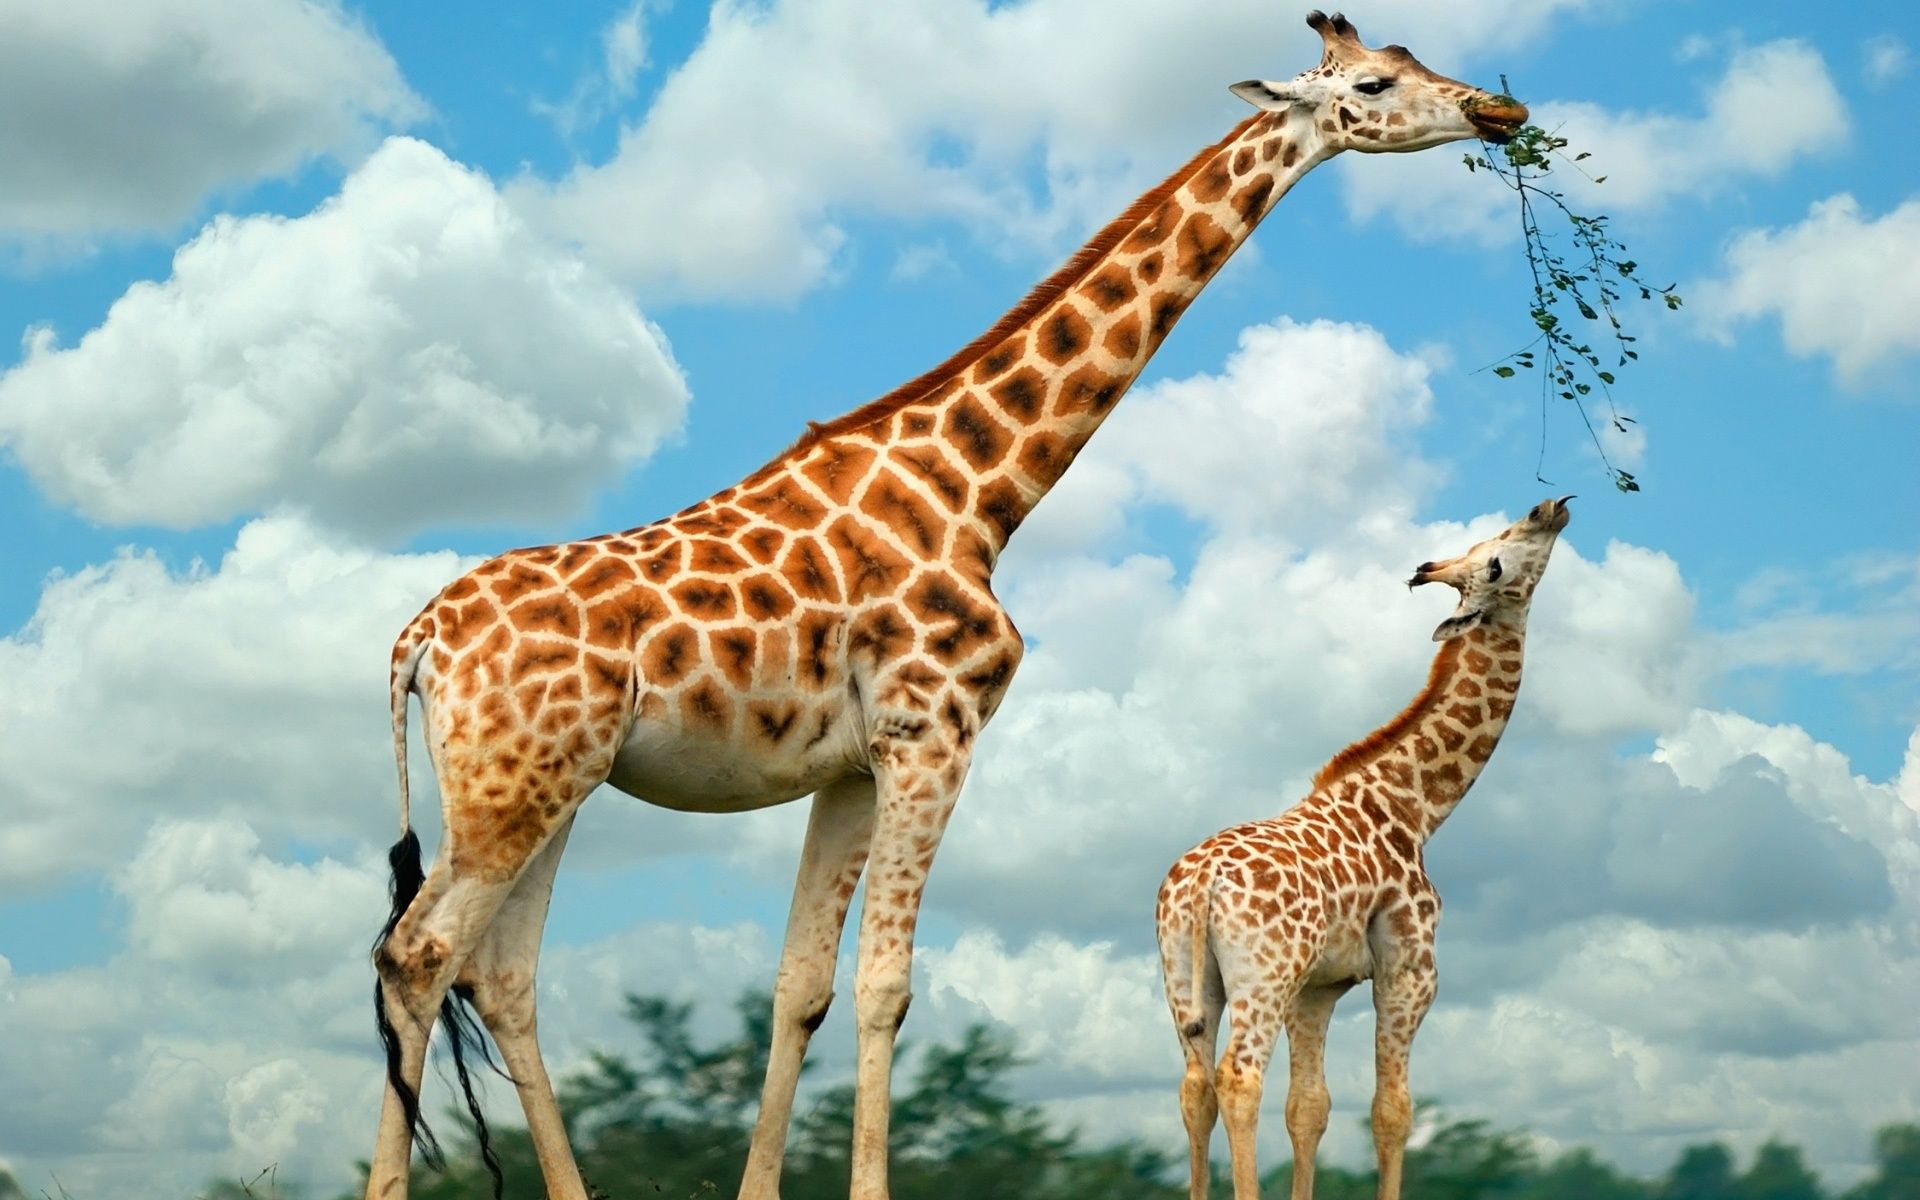 Two Giraffes Eating in the Wild.jpg (1920×1200) | WILD LIFE ...